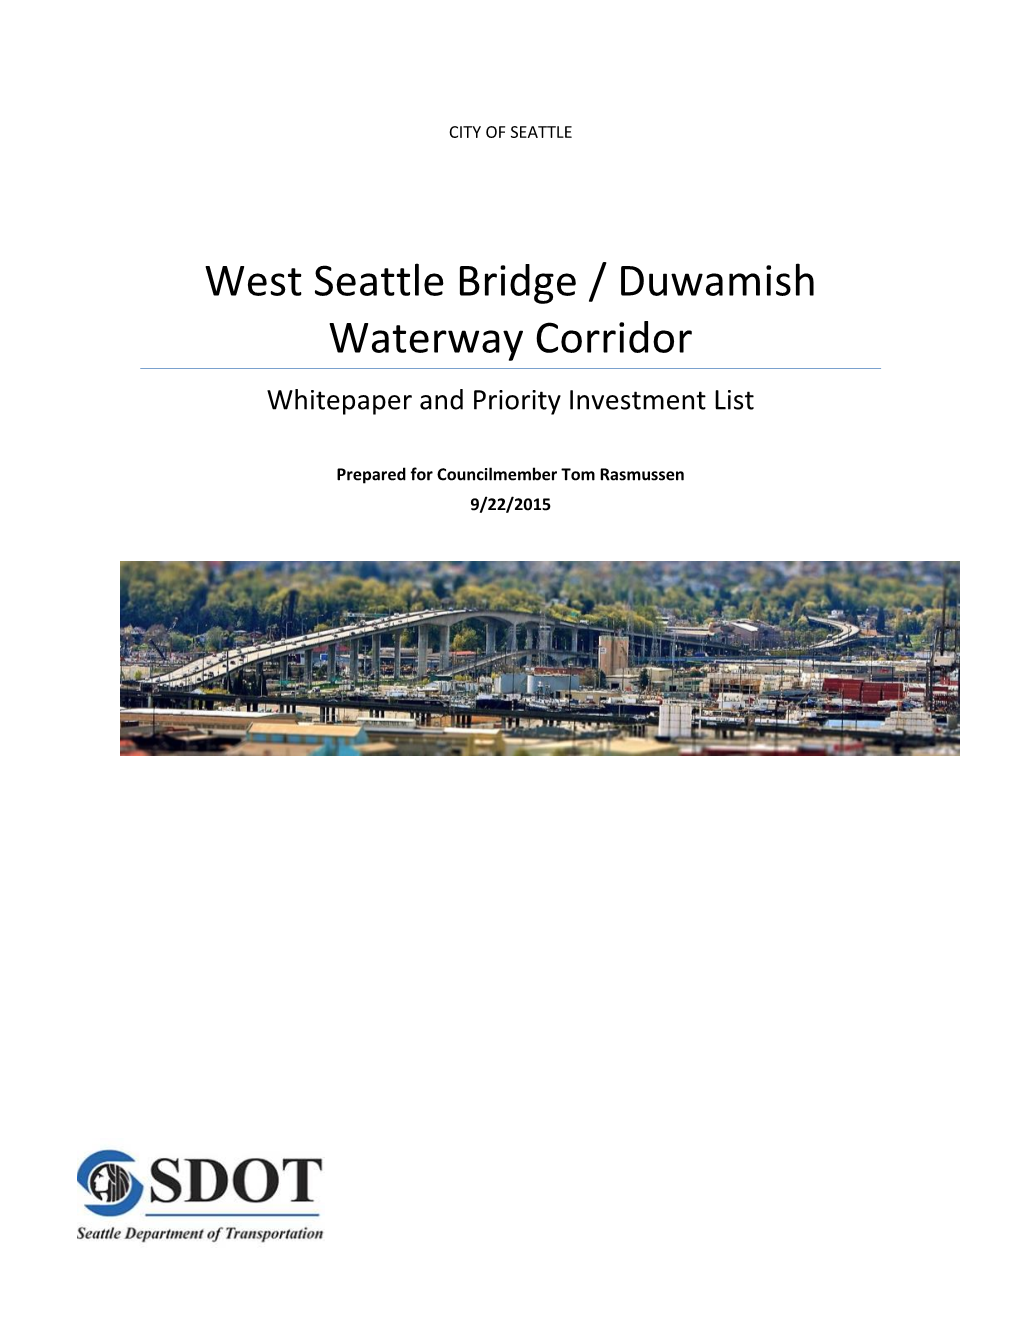 West Seattle Bridge/Duwamish Waterway Corridor Whitepaper